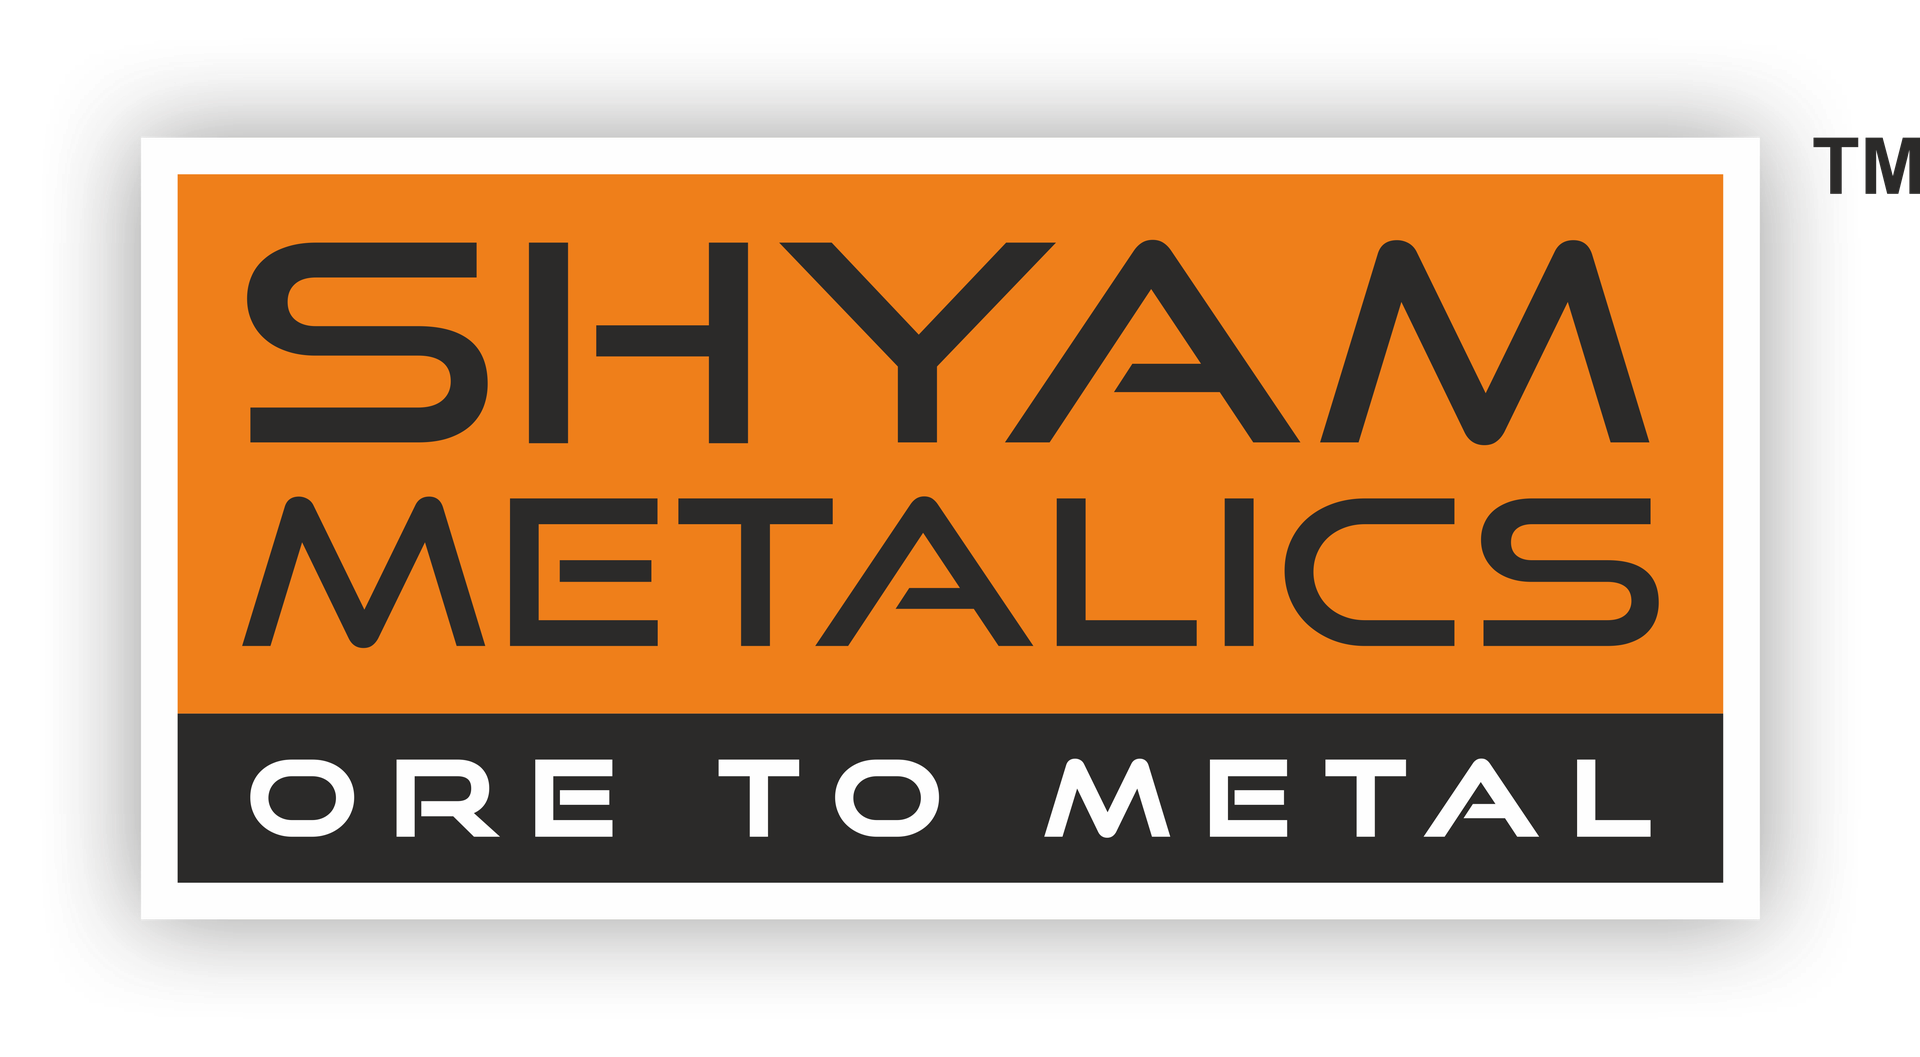 Shyam Metalics